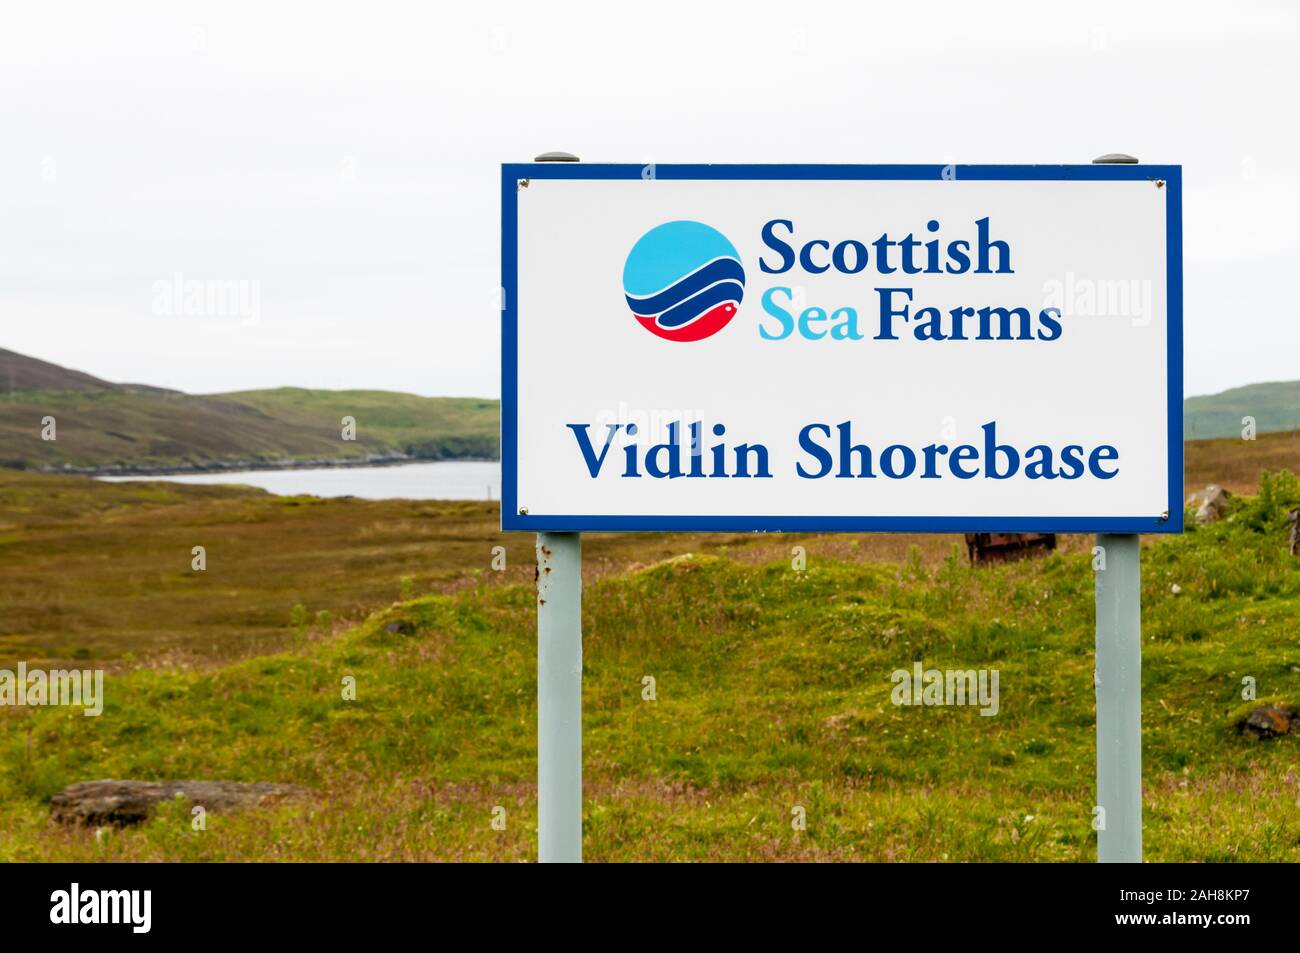 Firmar para Scottish granjas marinas en Vidlin Voe en Shetland. Foto de stock